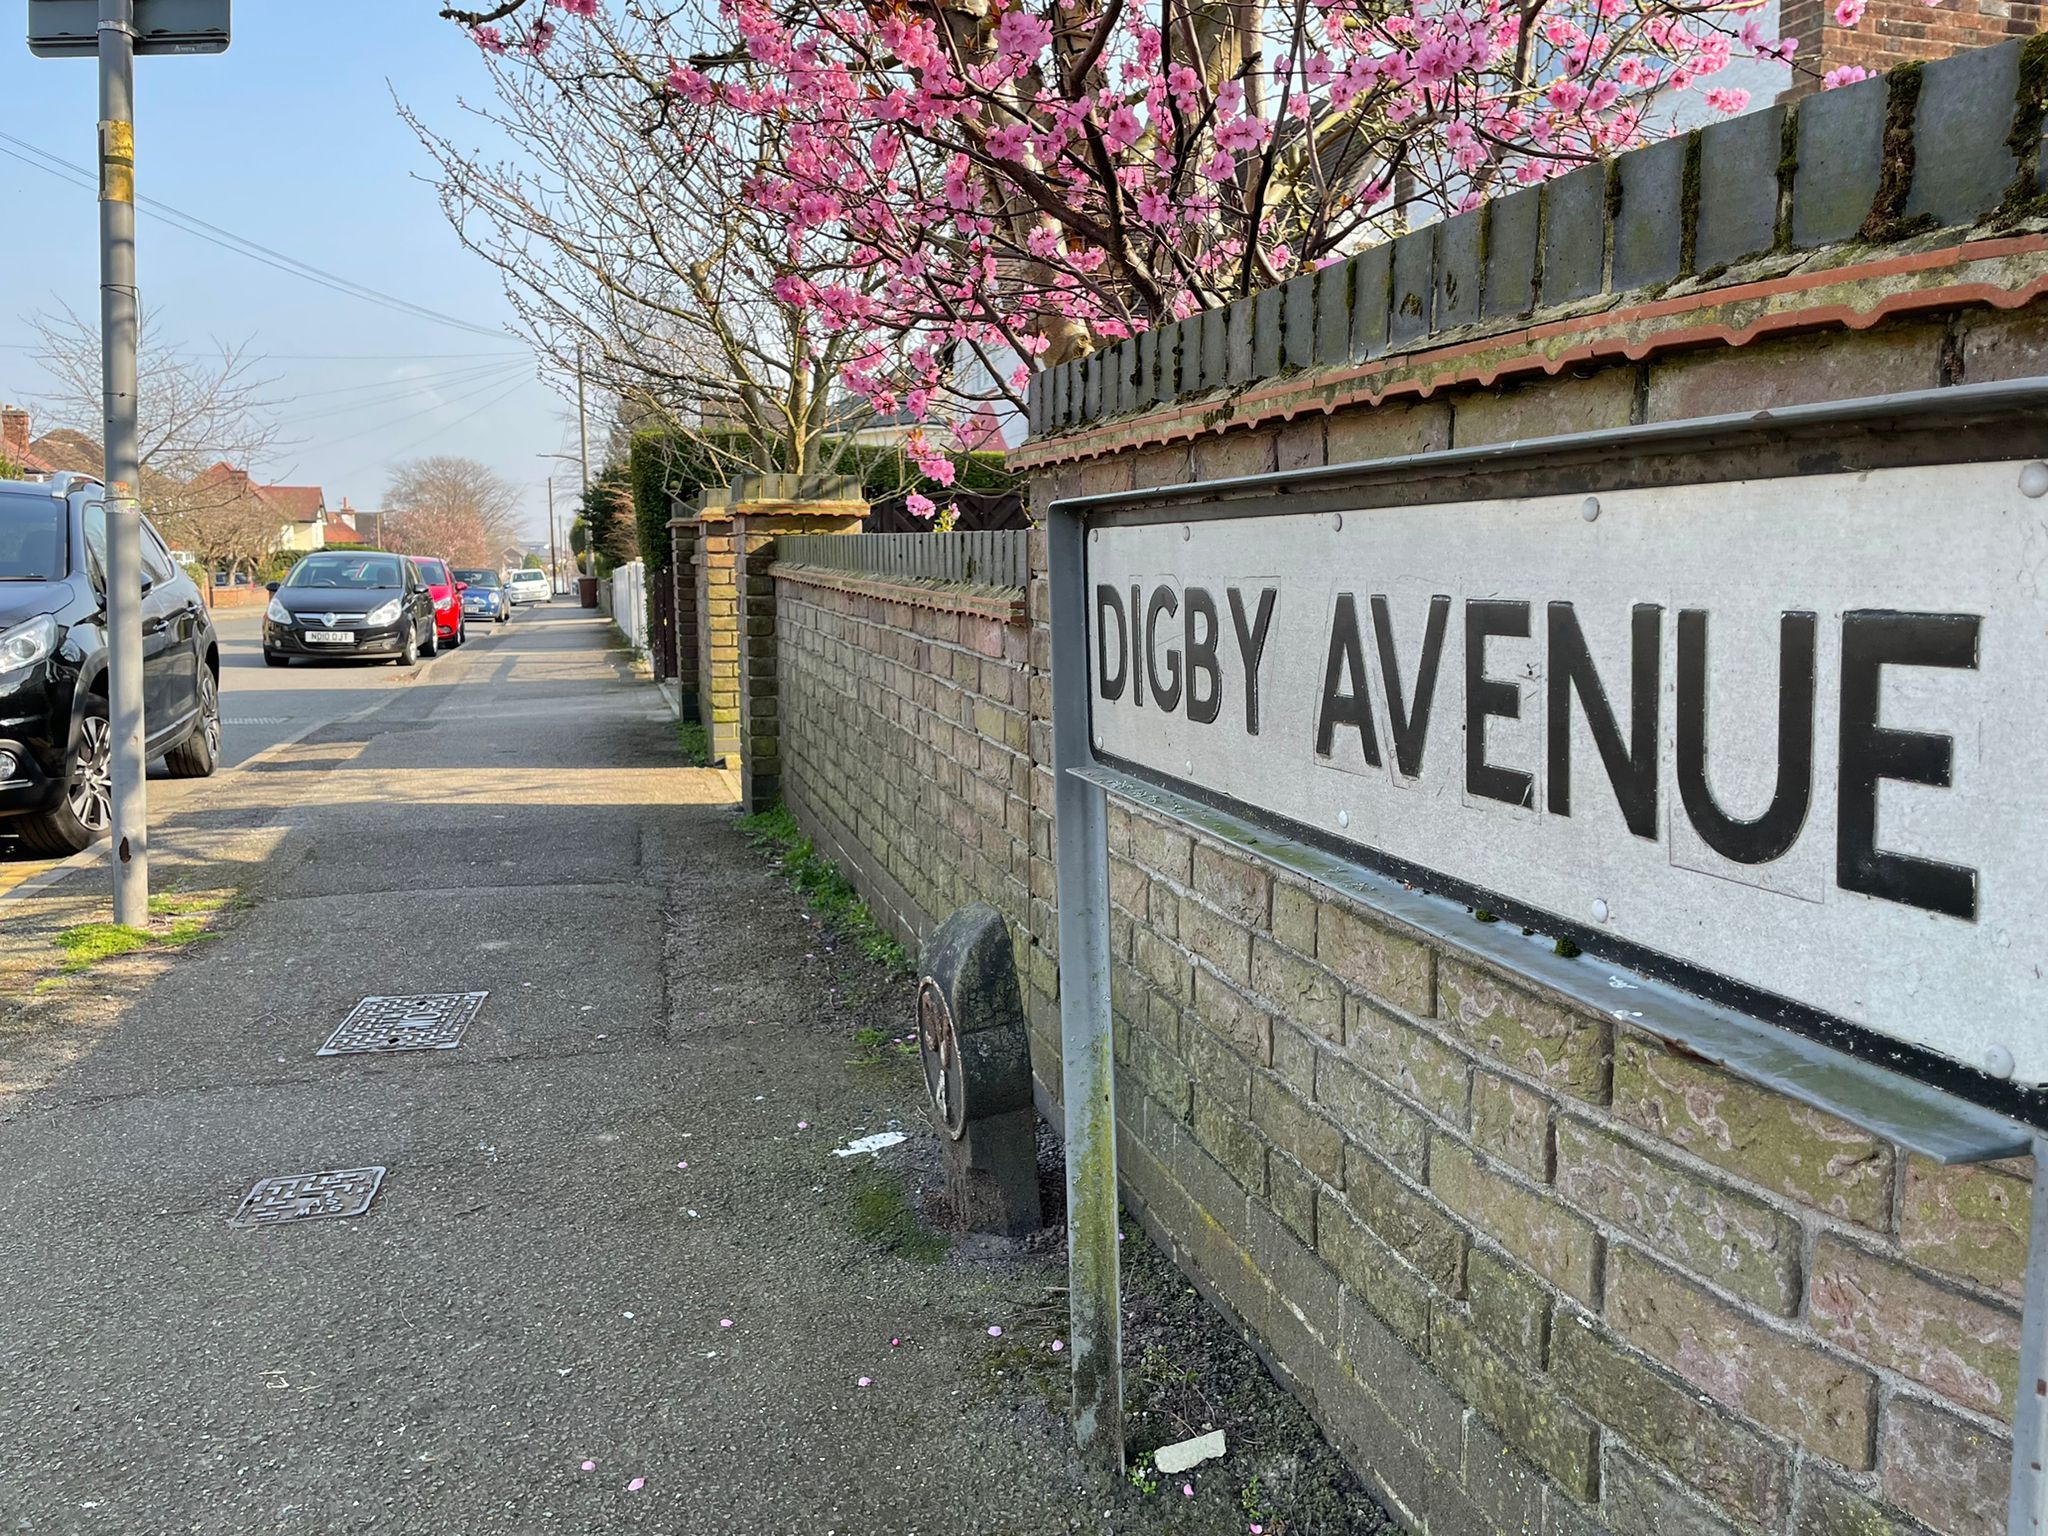 Digby Avenue in Mapperley 2